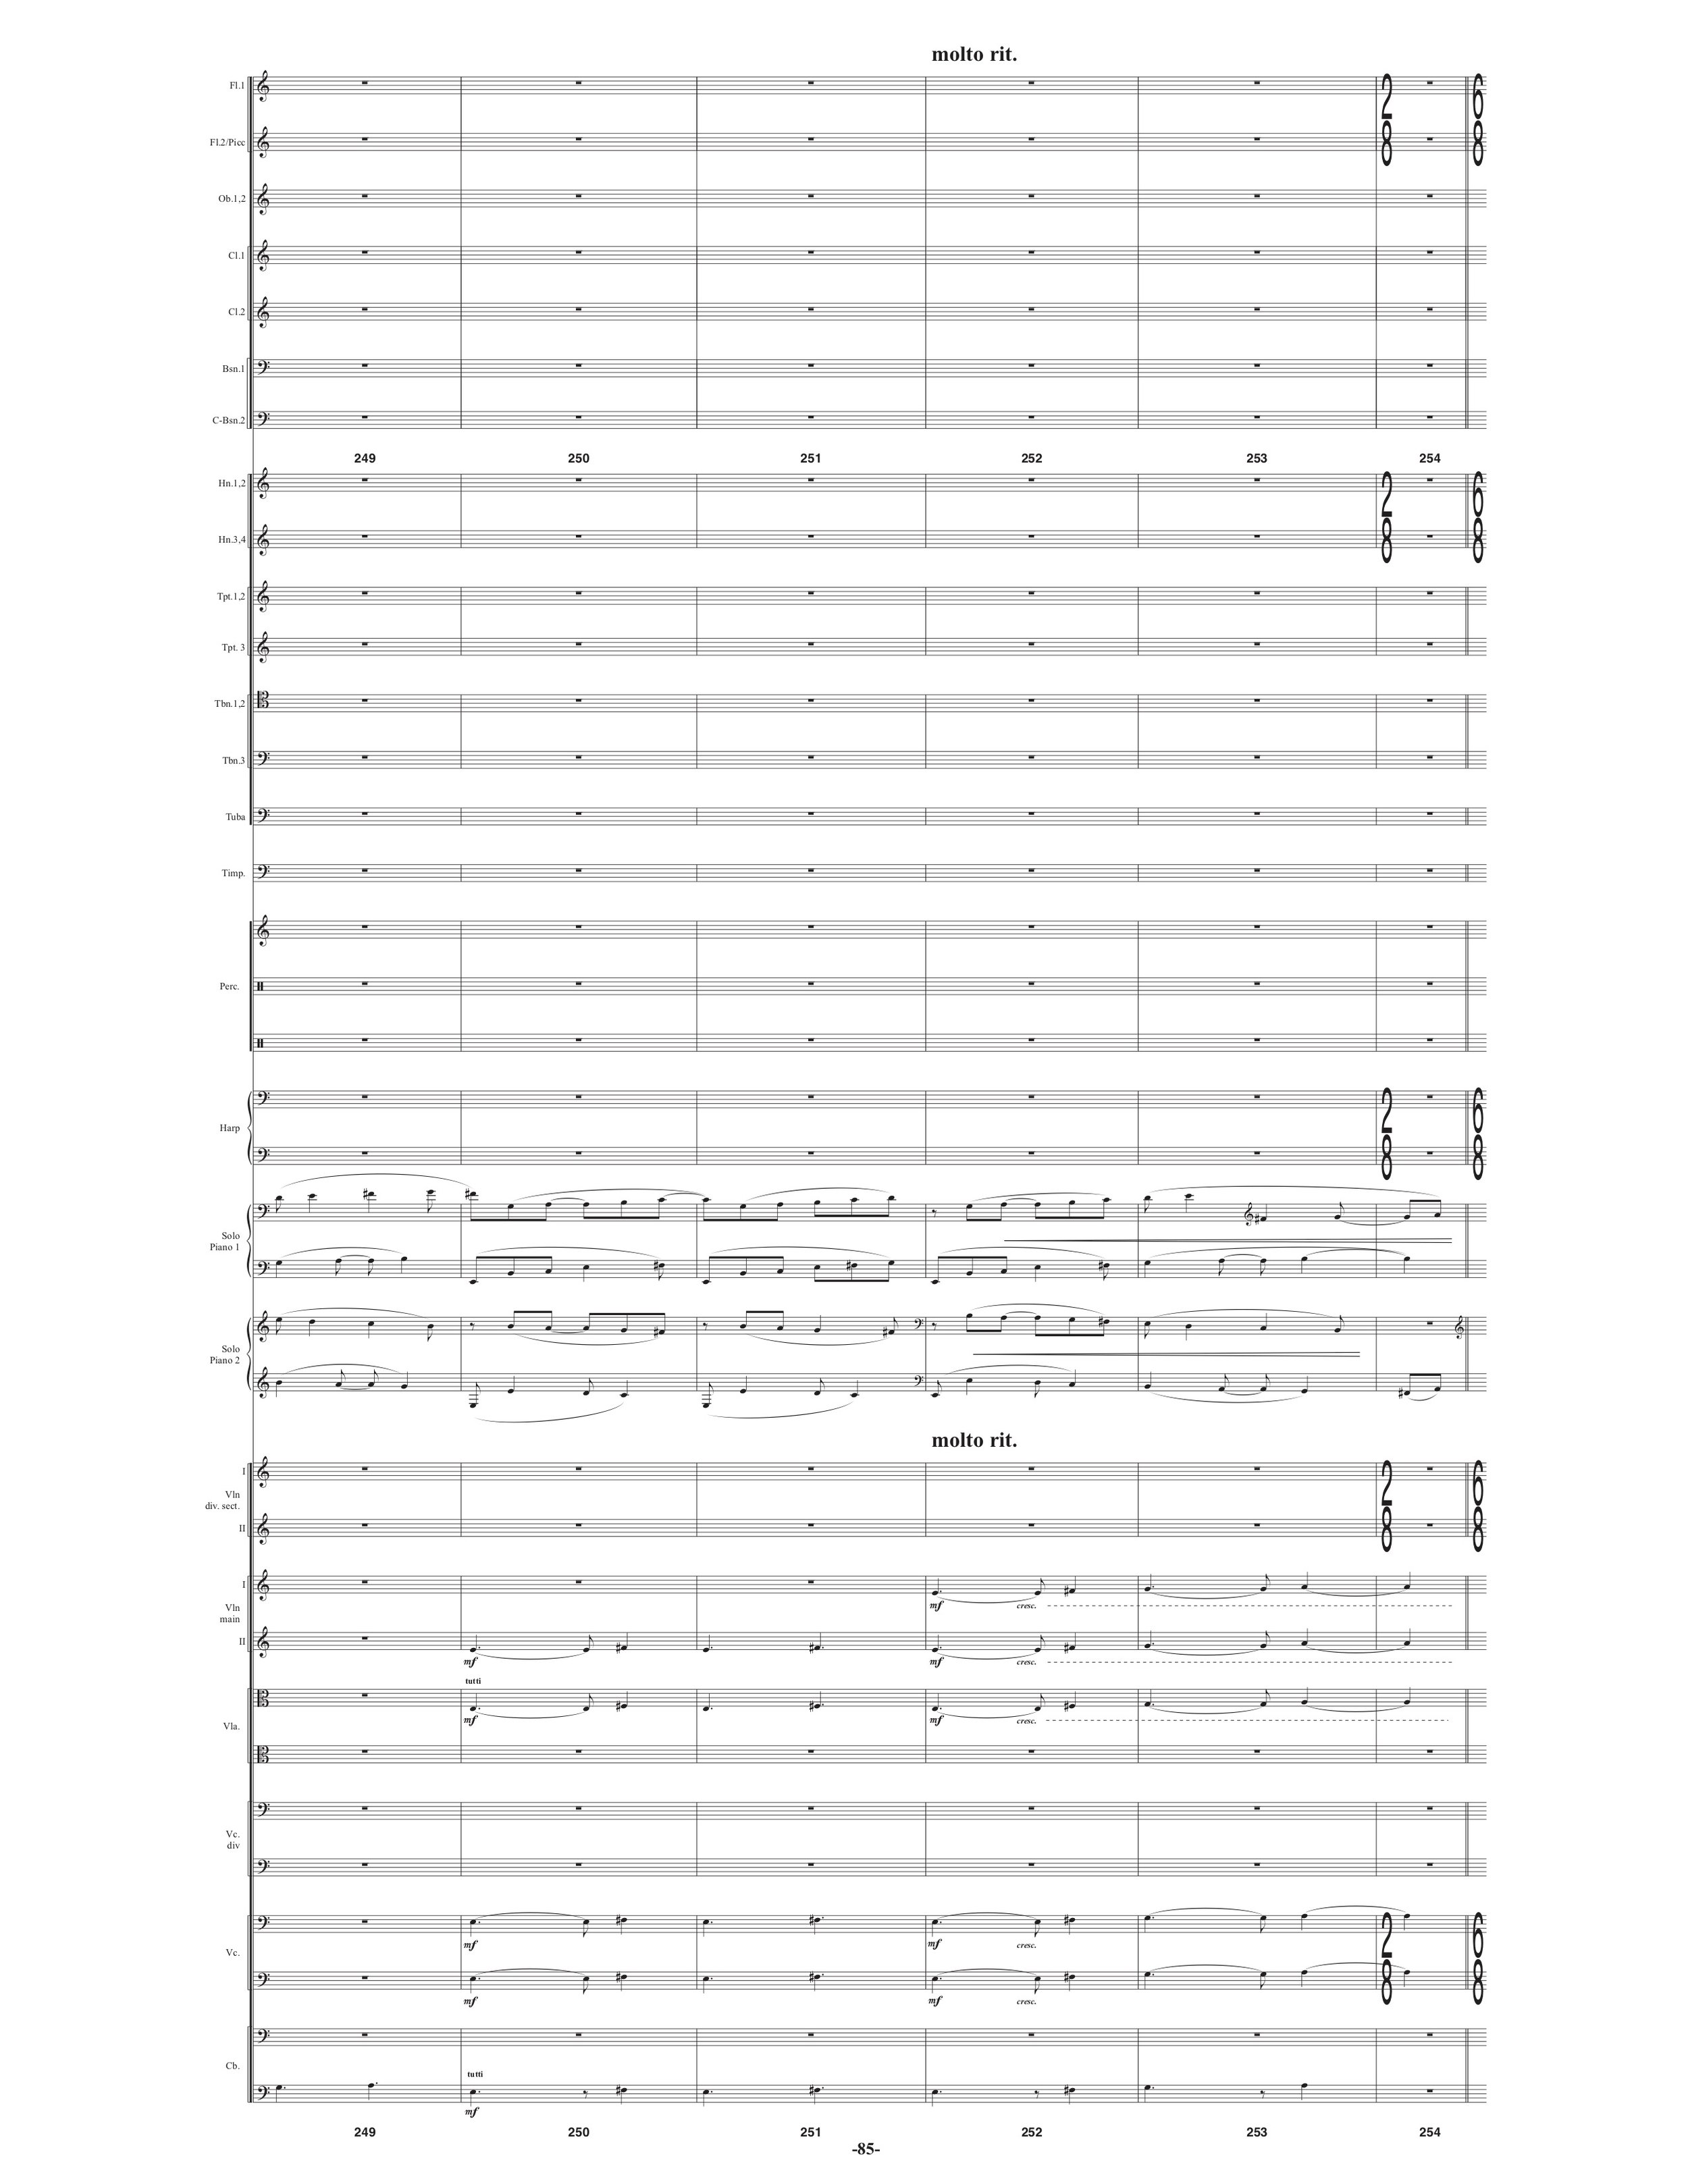 Symphony_Orch & 2 Pianos p90.jpg